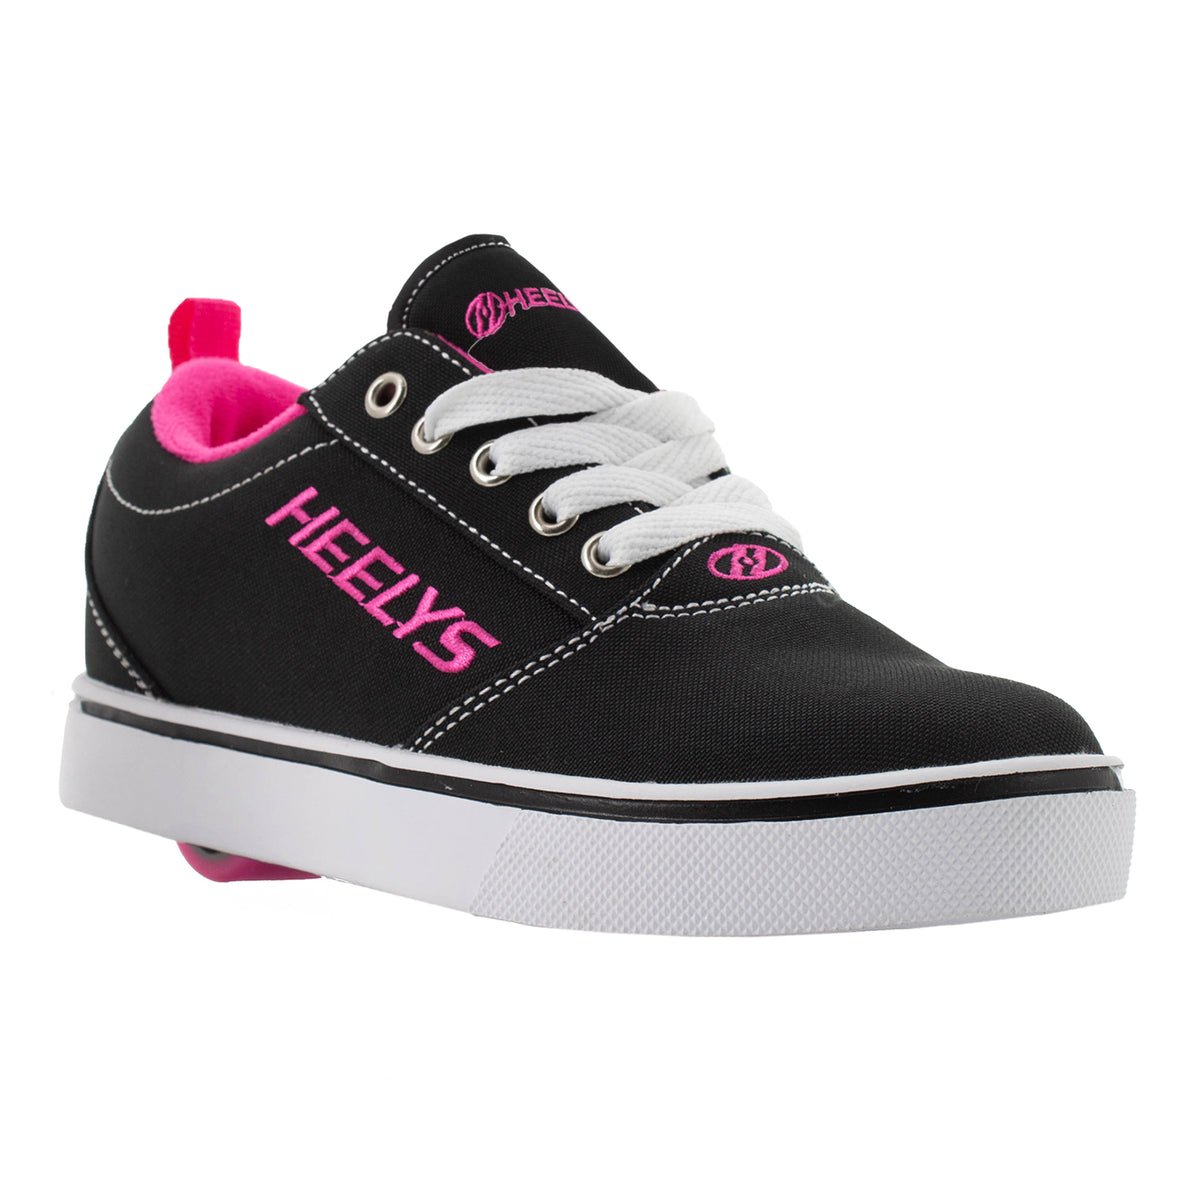 HEELYS Unisex Kids' Pro 20 Wheeled Shoe Black/White/Pink - HE100760H BLACK/WHITE/PINK - BLACK/WHITE/PINK, 3 M US Little Kid